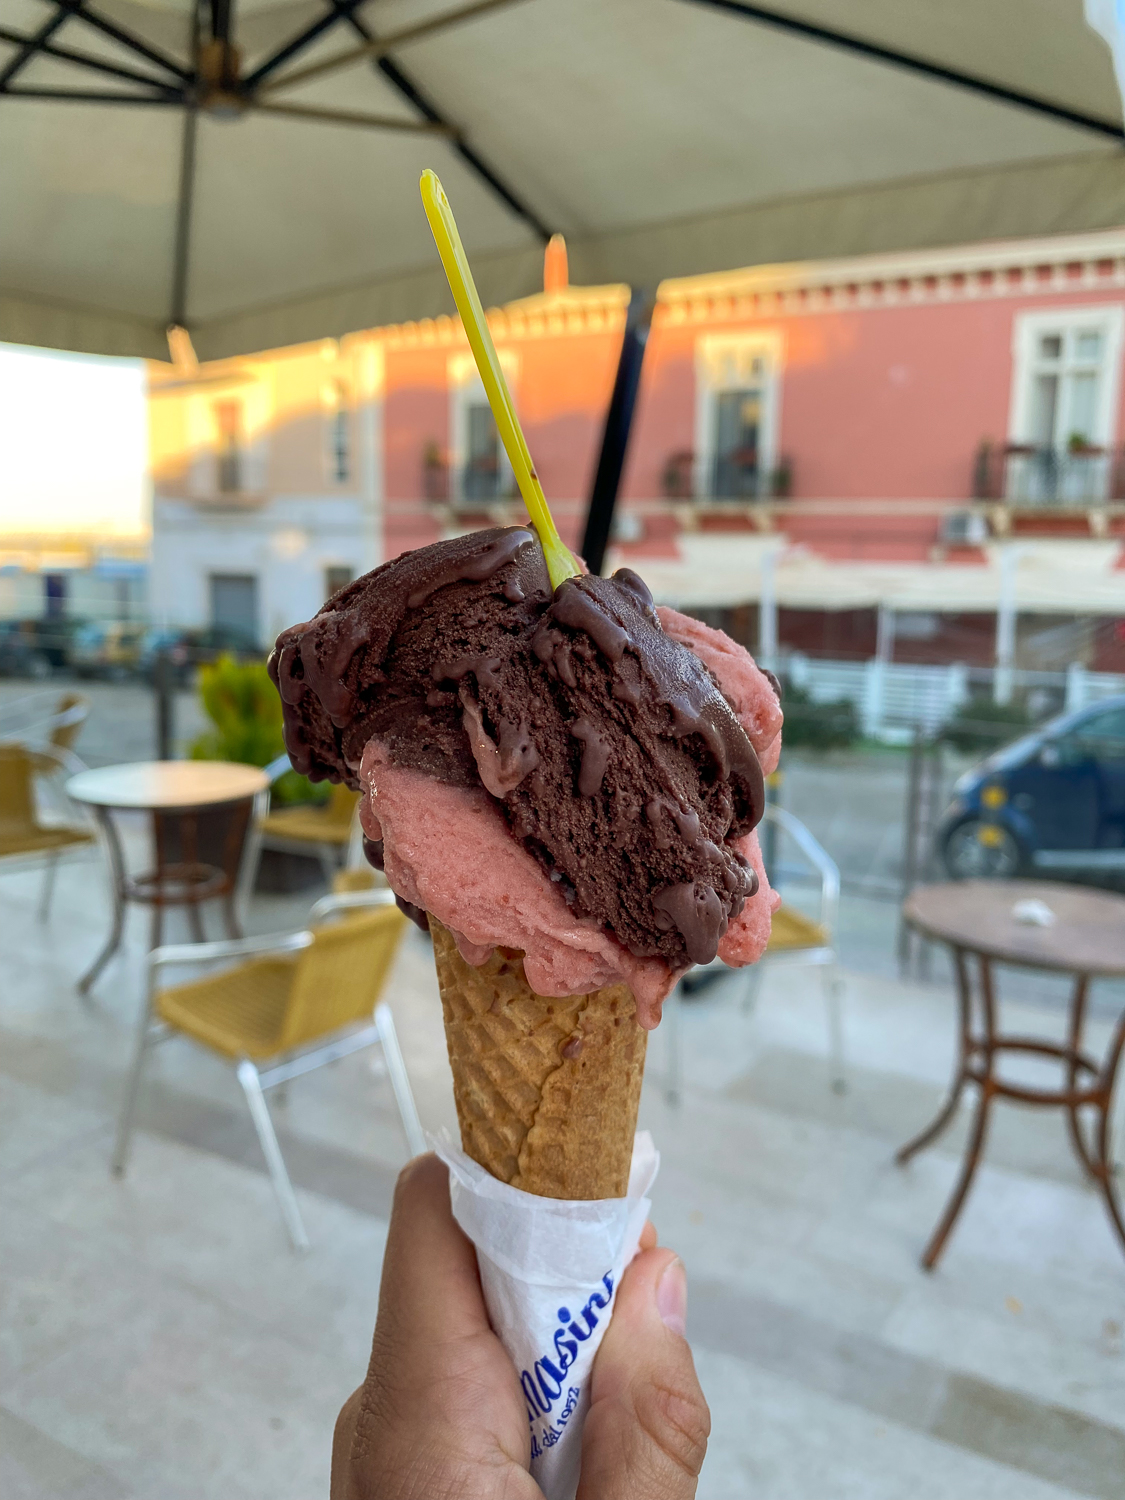 Holding a cone of ice cream